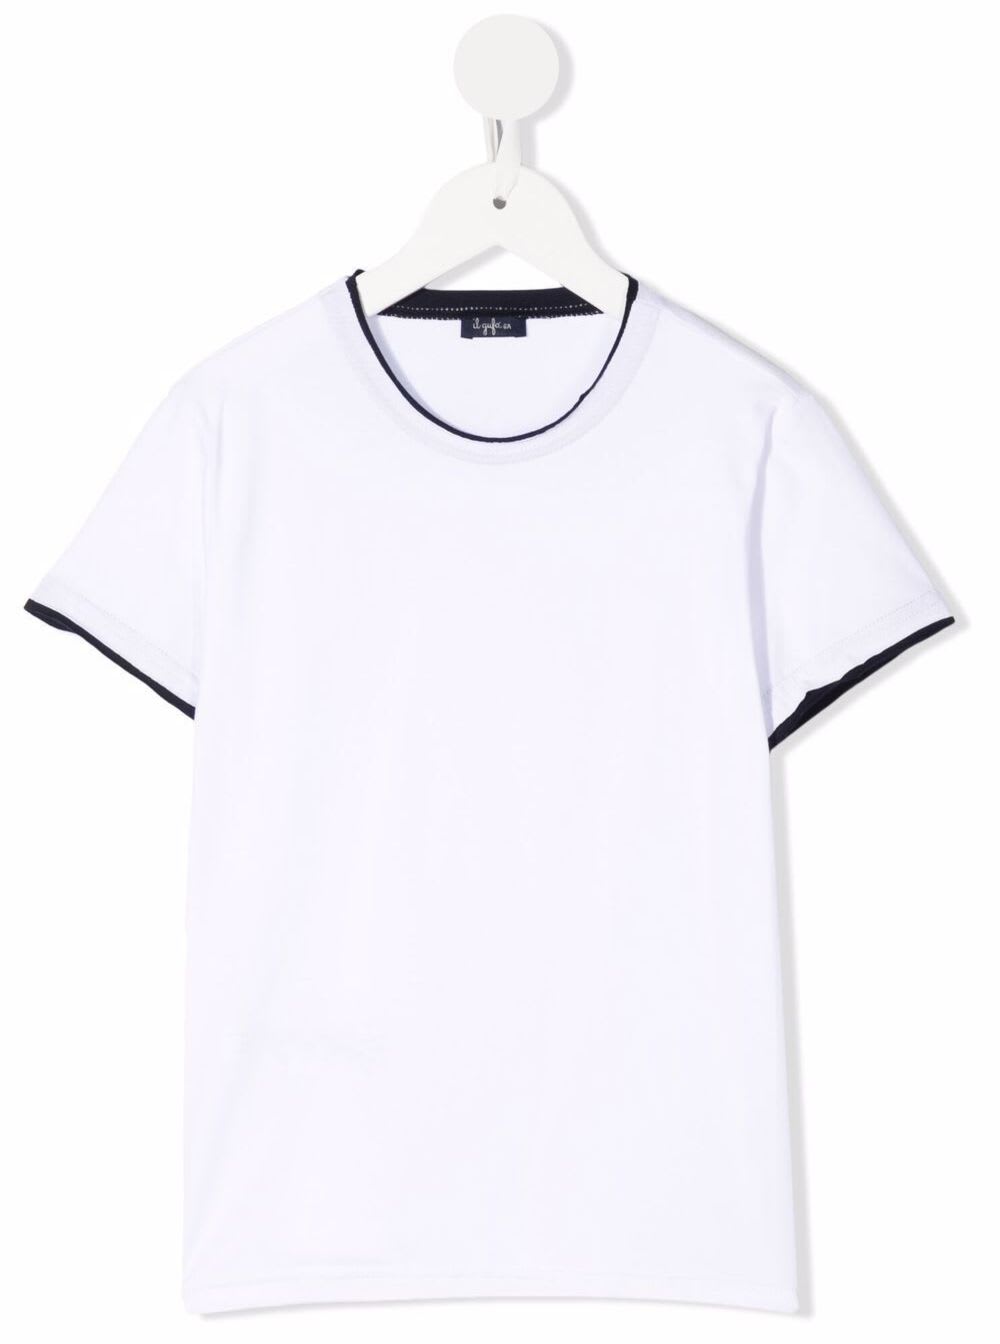 Il Gufo White Cotton T-shirt With Blue Profiles